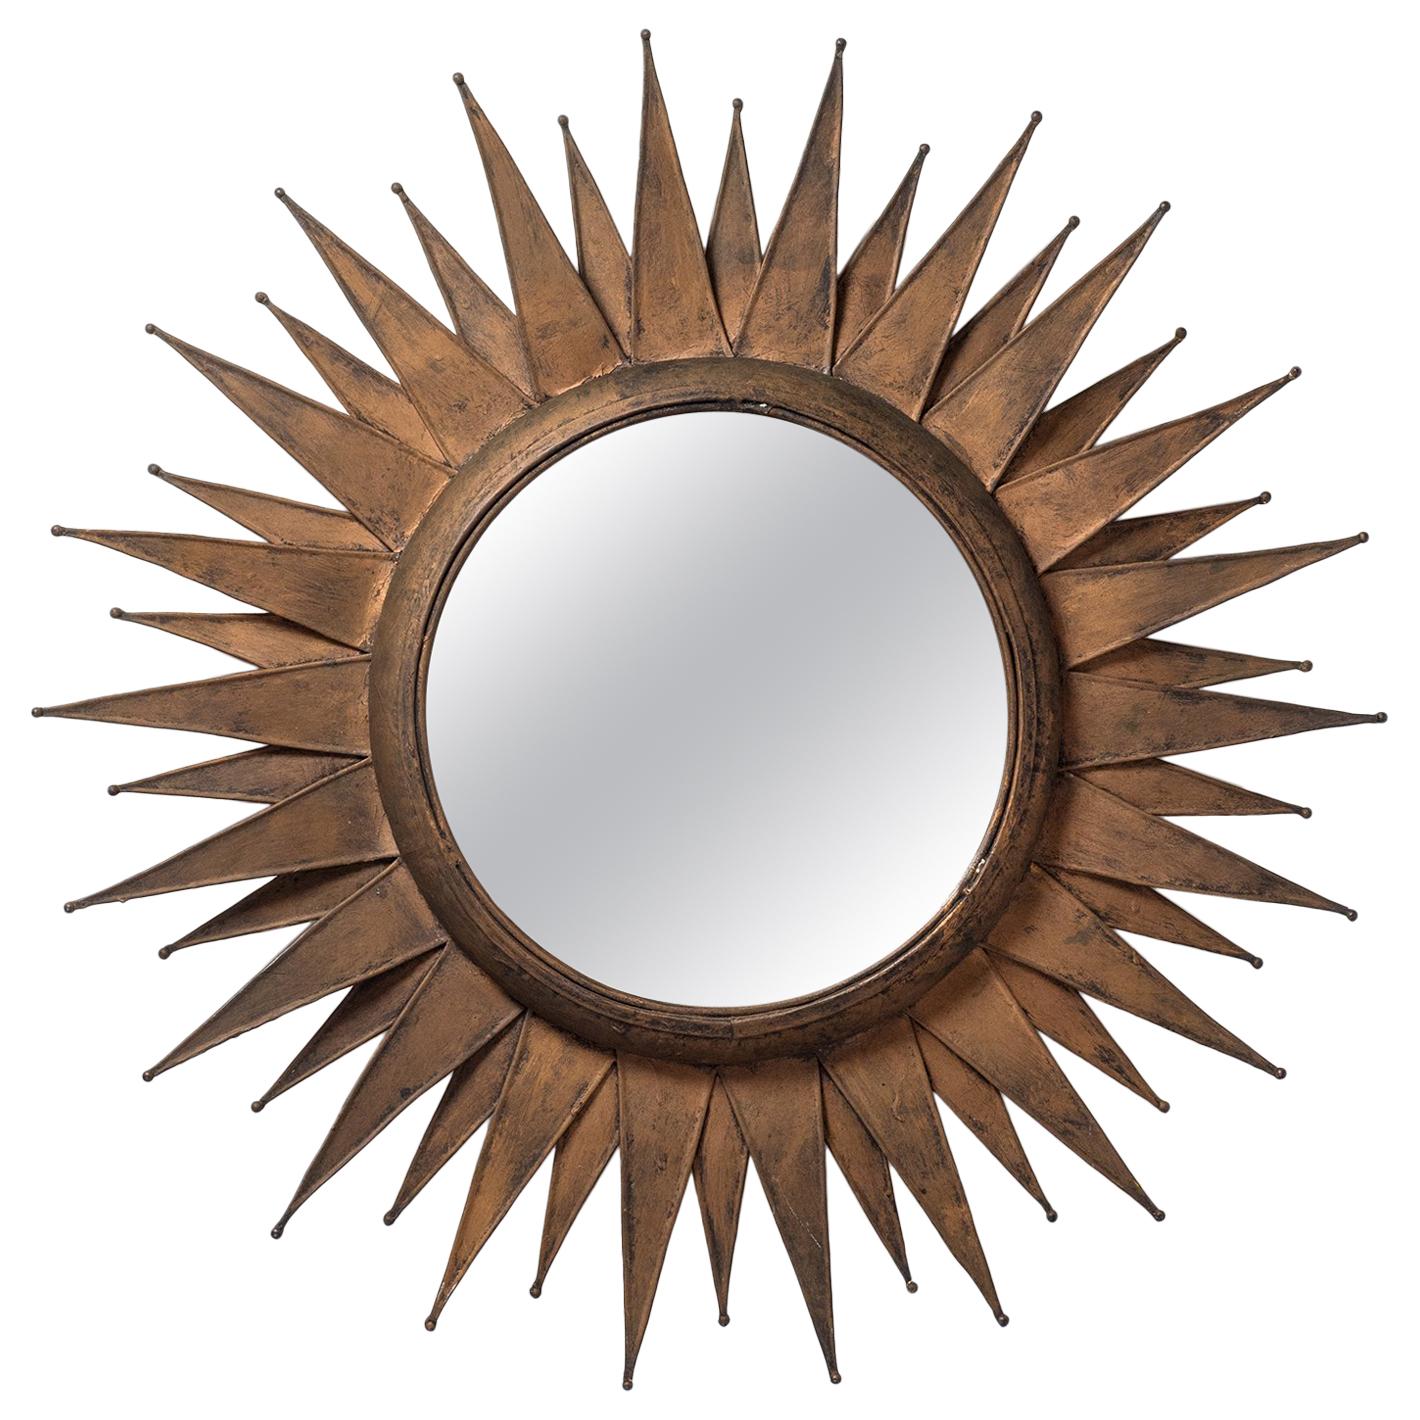 French Artisanal Sunburst Mirror, circa 1970